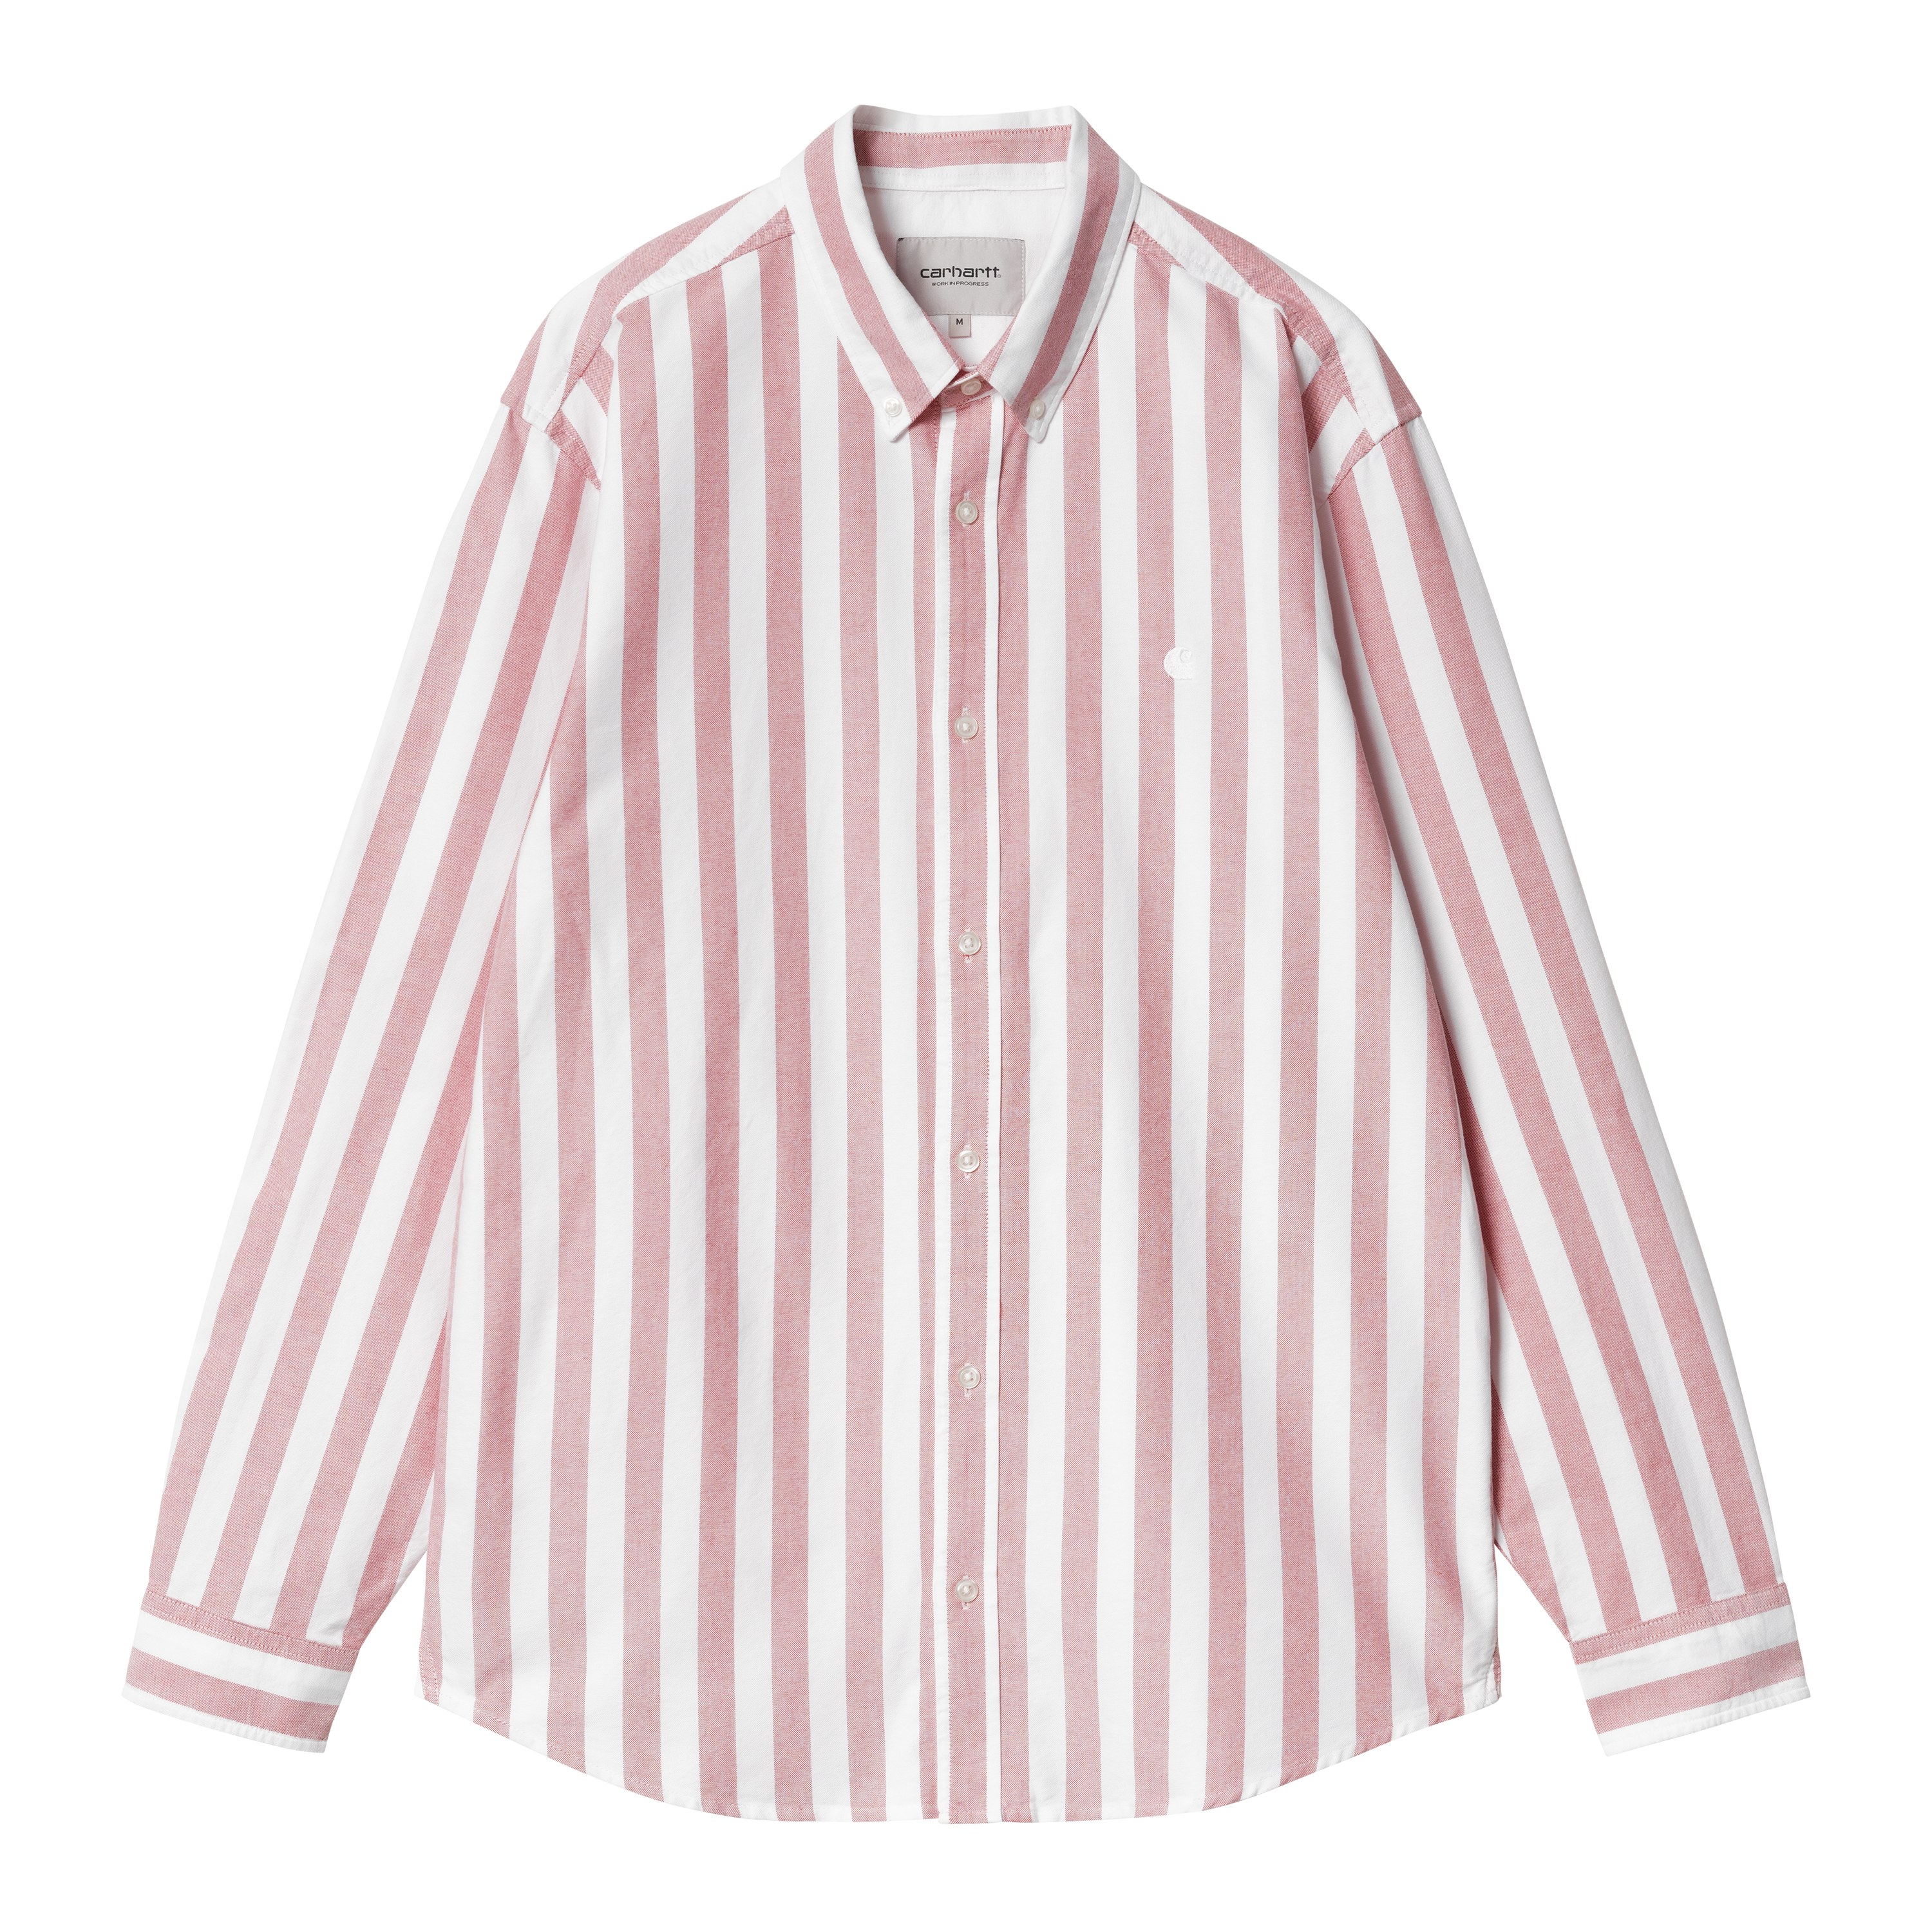 Carhartt WIP Long Sleeve Dillion Shirt in Rot